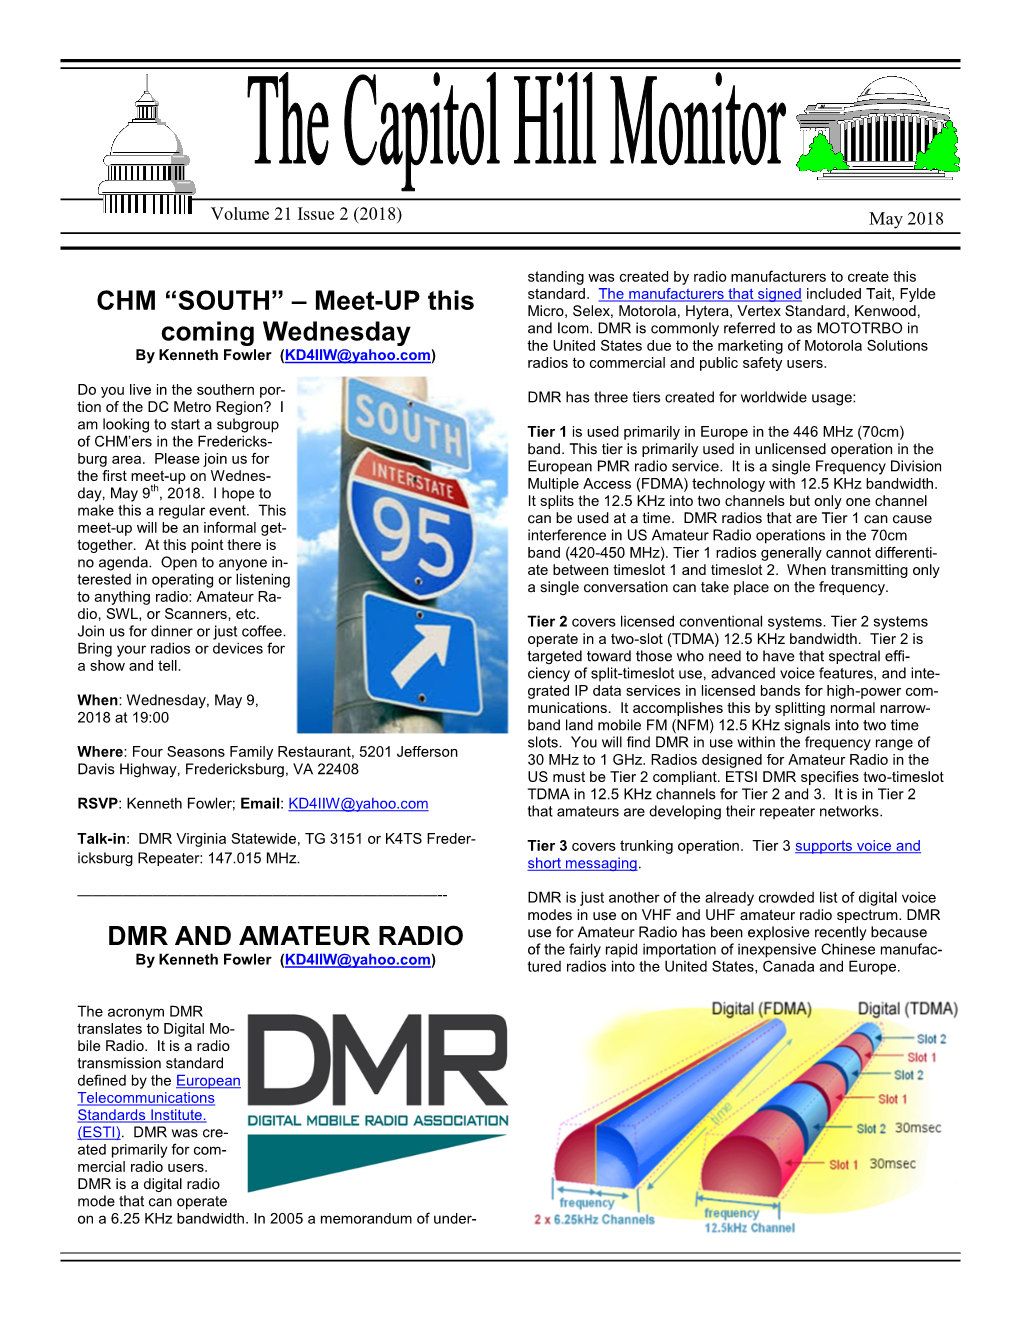 Dmr and Amateur Radio